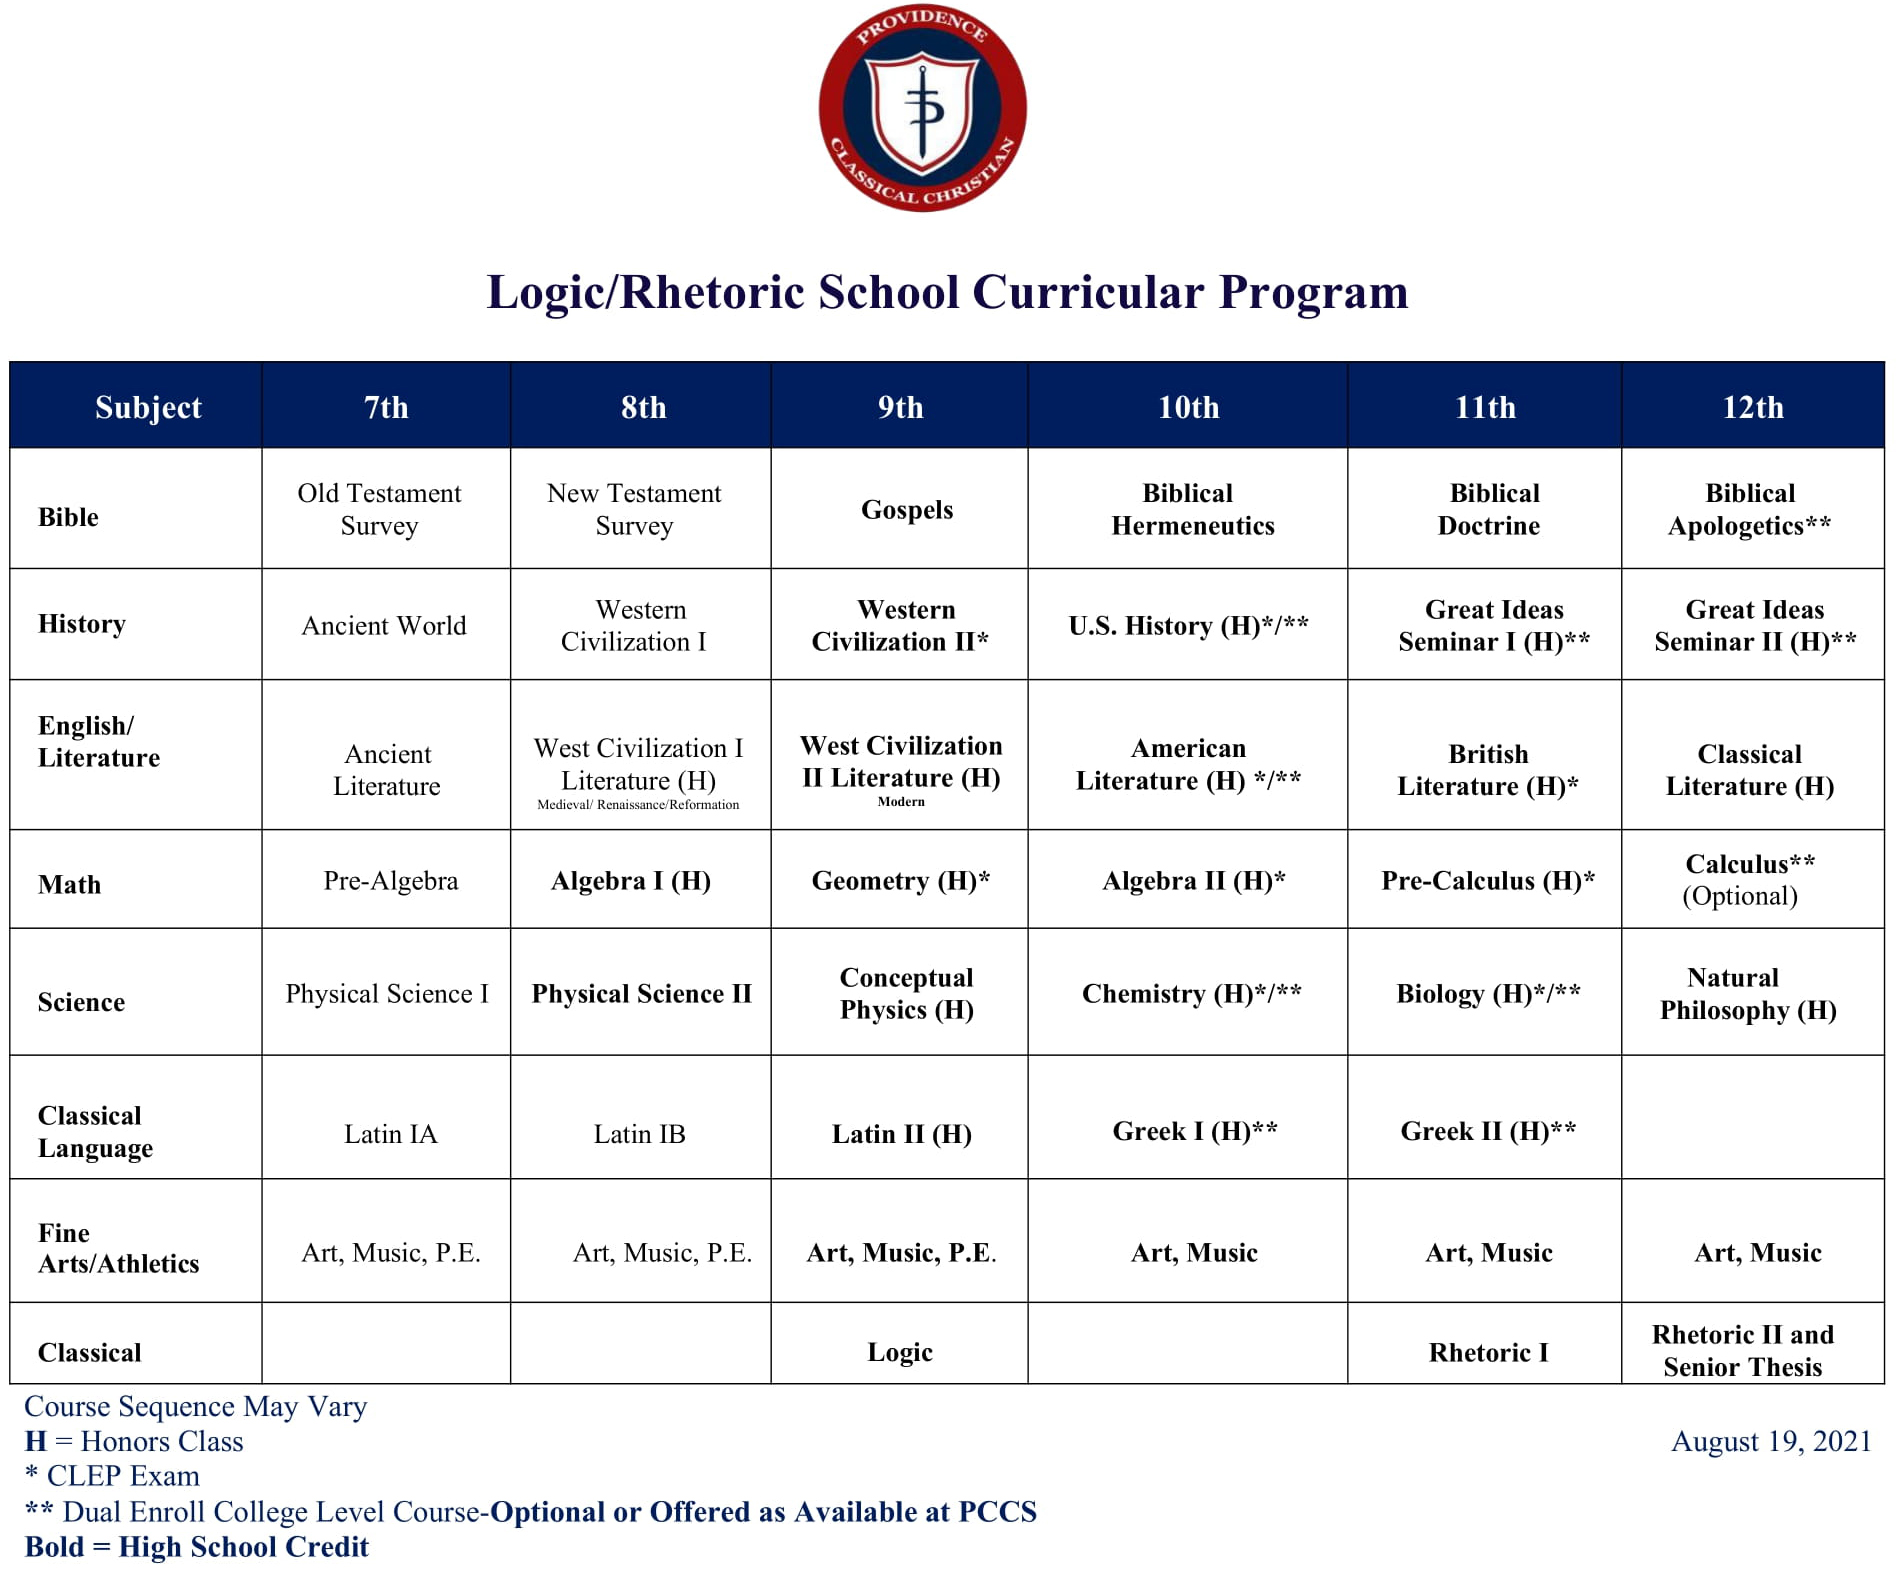 Curricular Program Logic Rhetoric 8.21-1